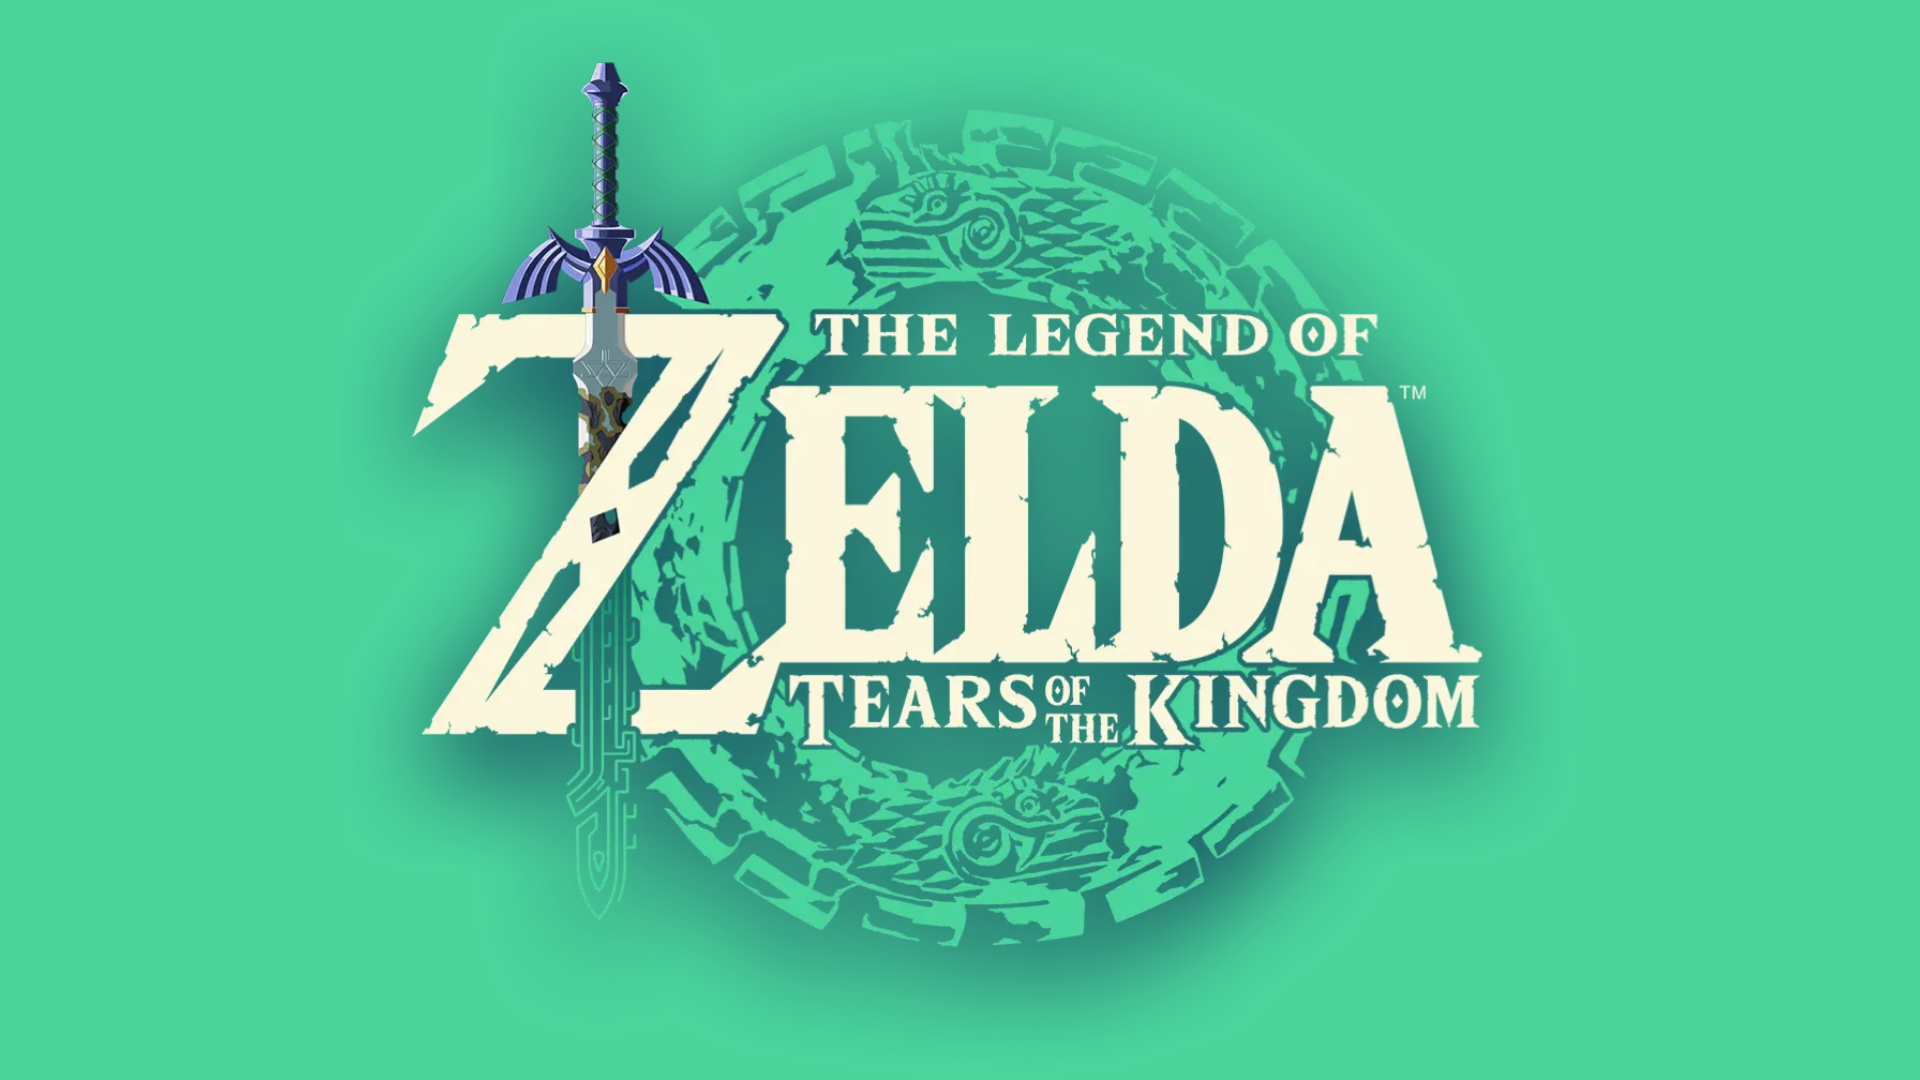 How to Play Zelda Tears Of The Kingdom on PC using Ryujinx and Yuzu